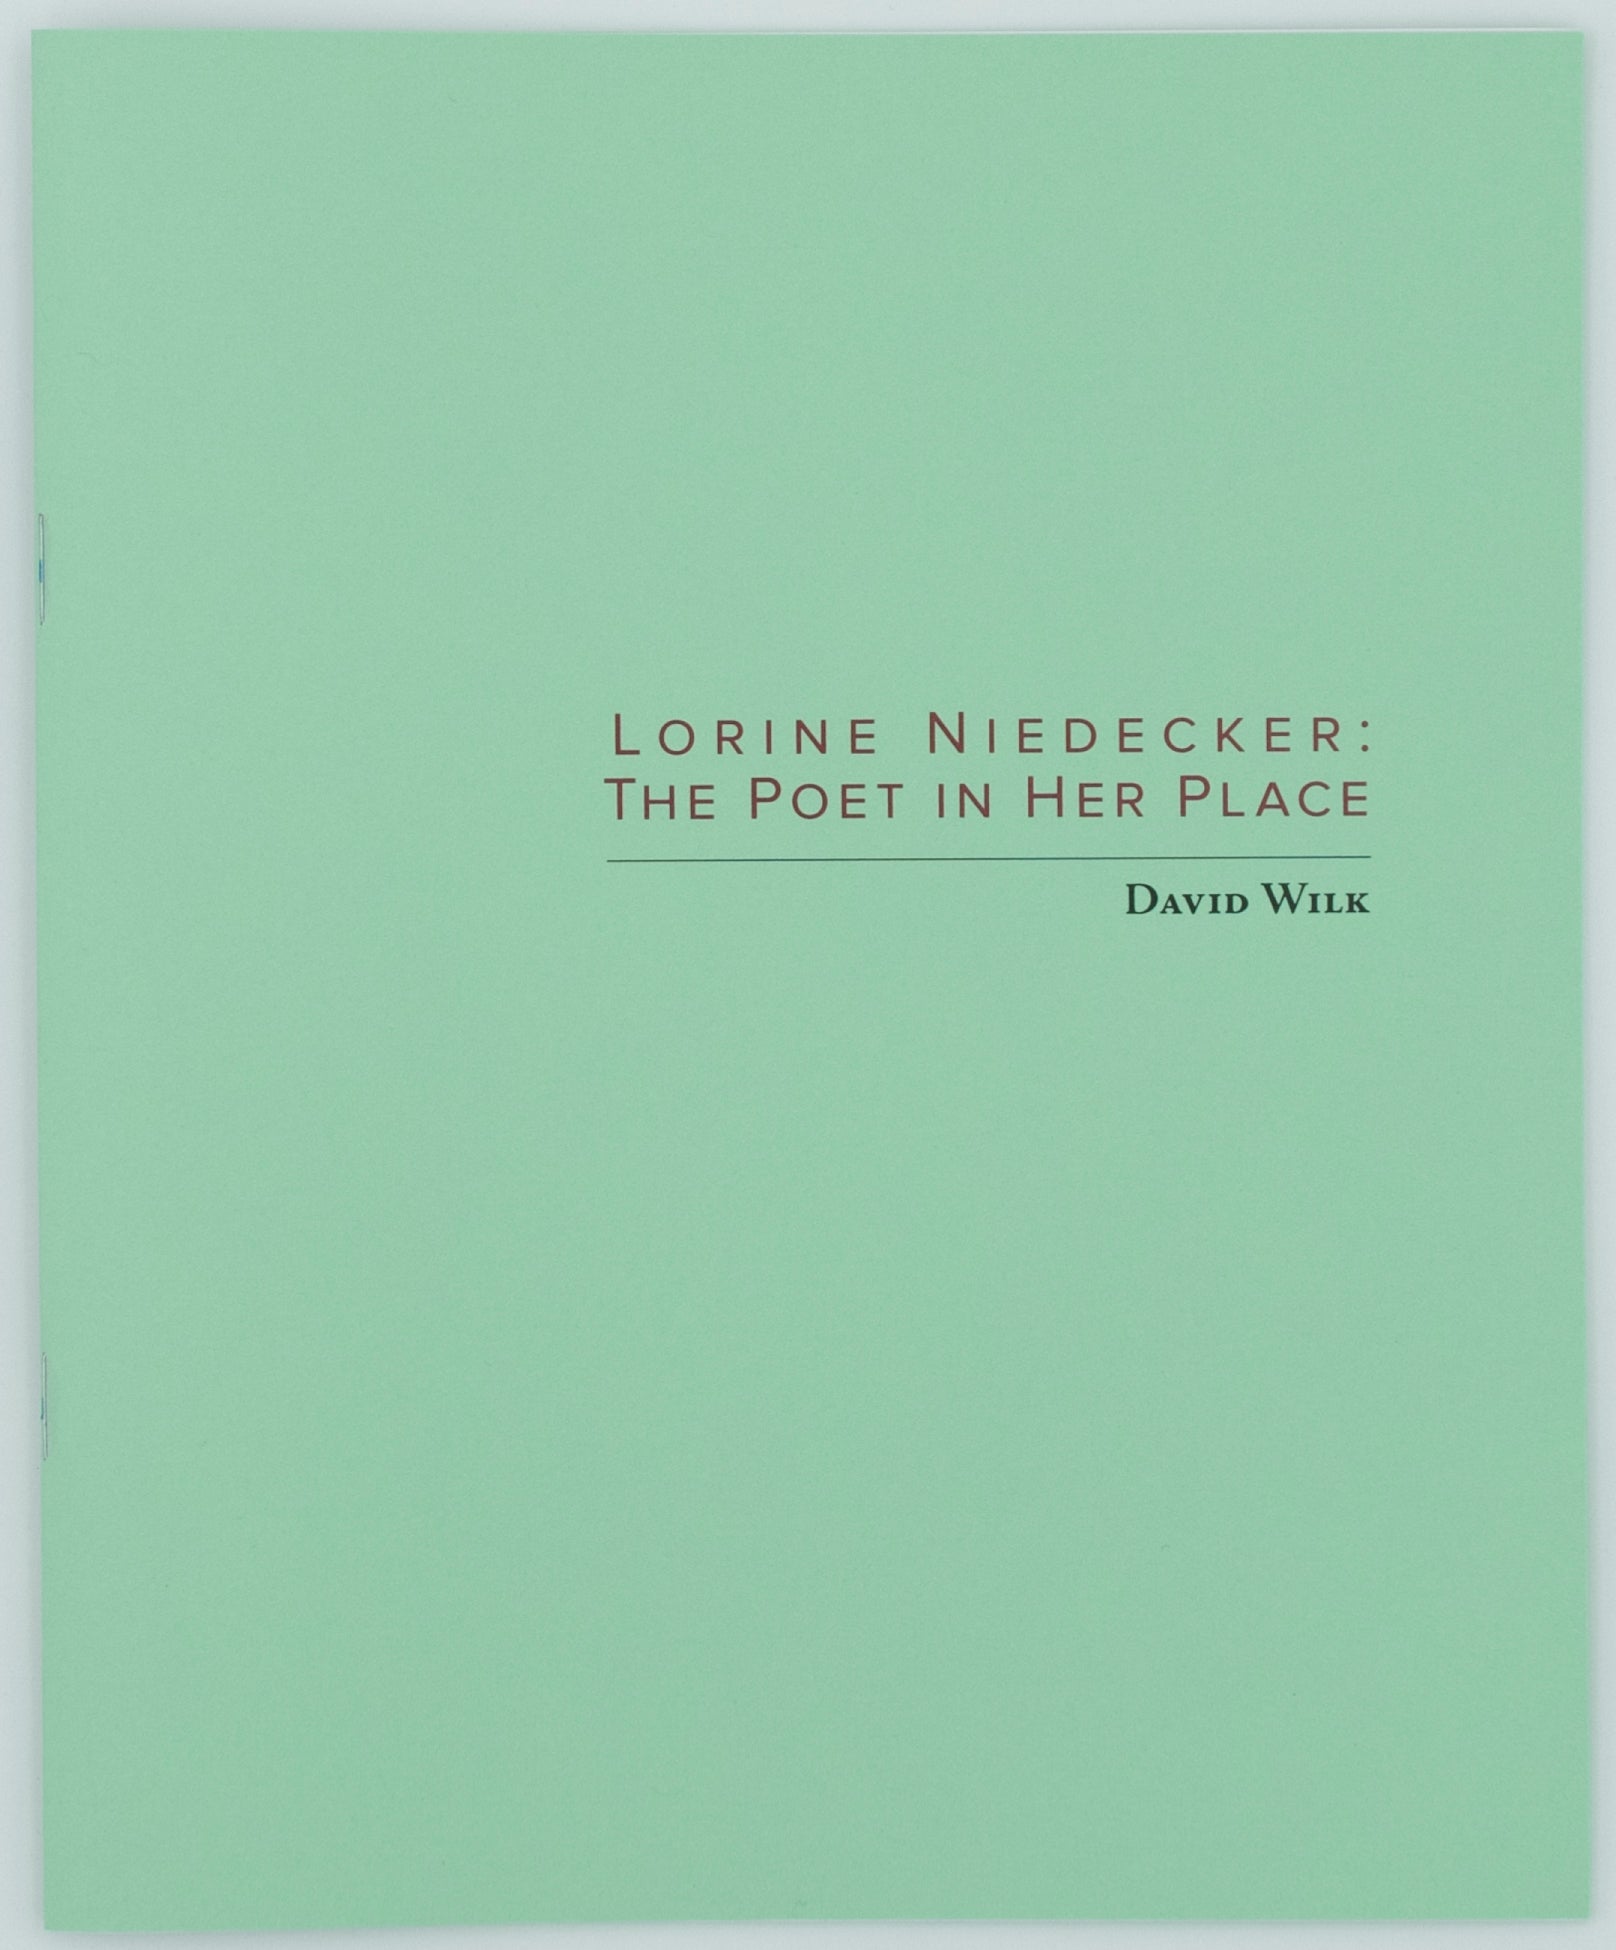 Lorine Niedecker: The Poet in Her Place